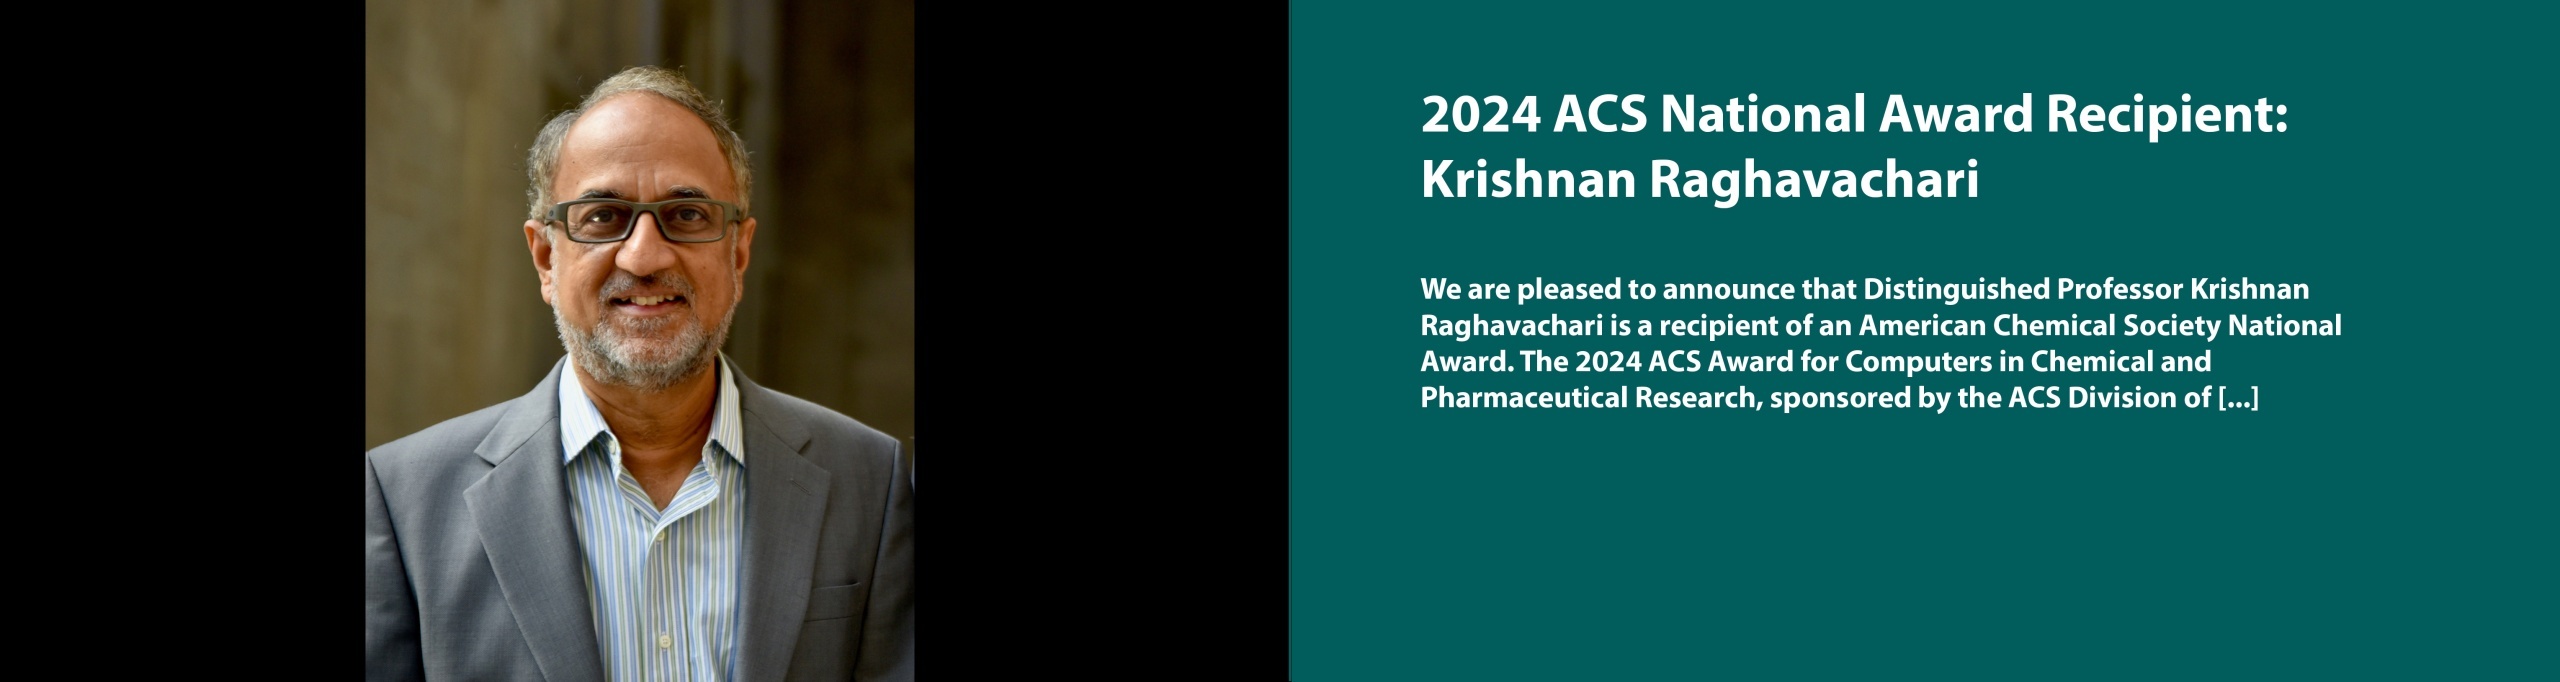 2024 ACS National Award Recipient: Krishnan Raghavachari